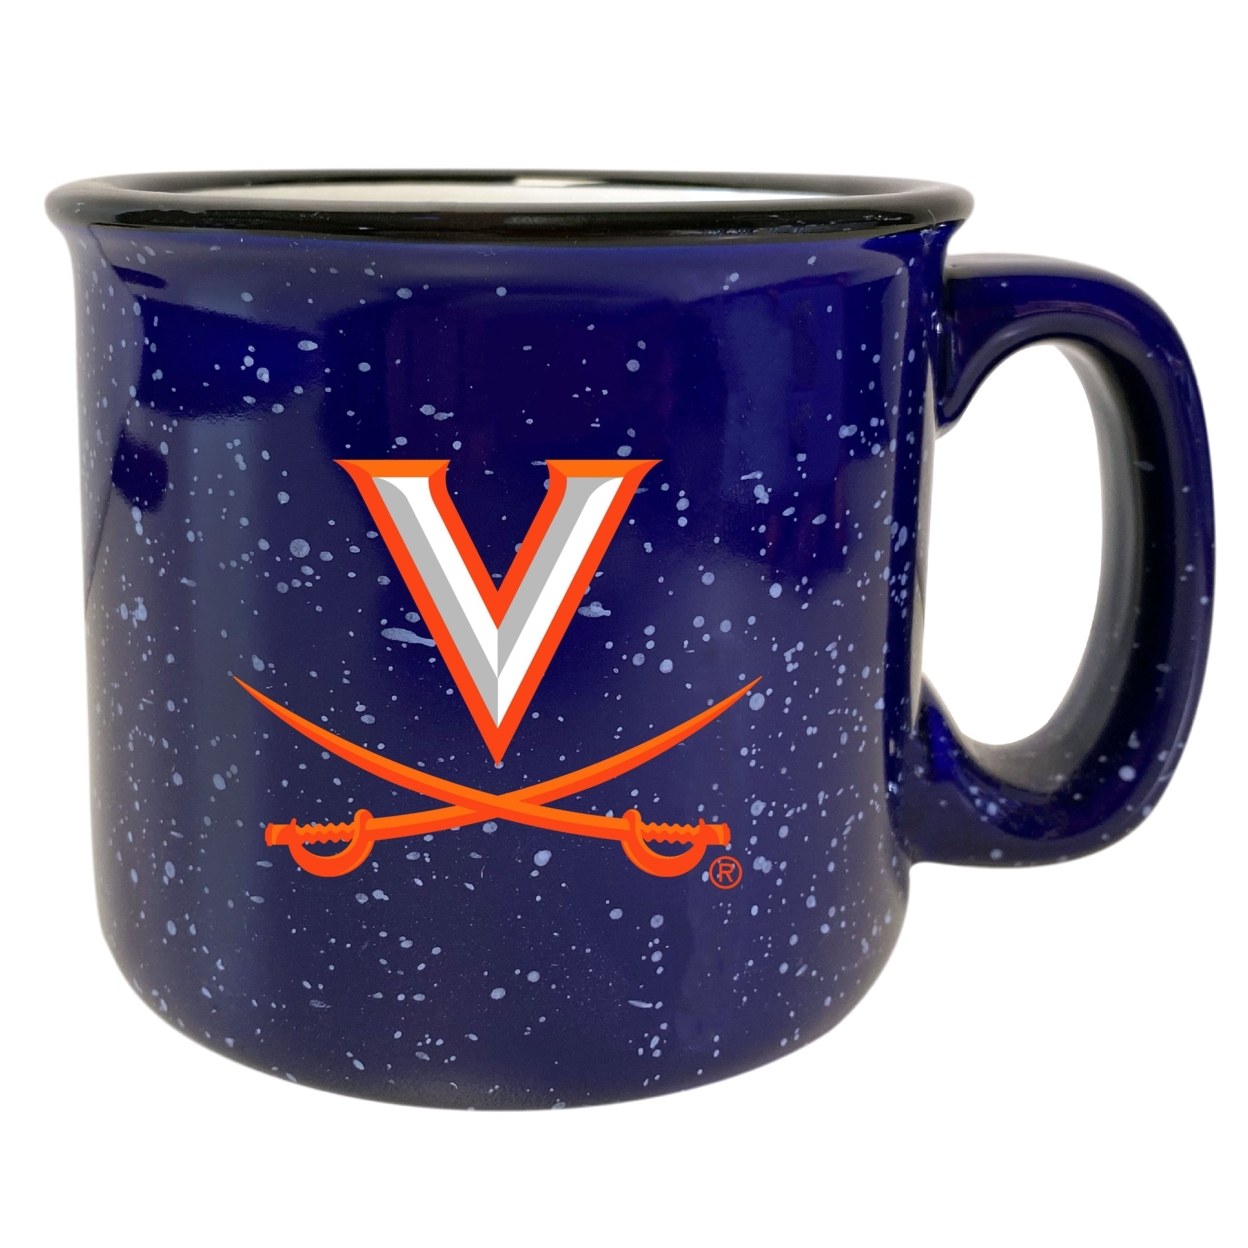 Virginia Cavaliers Speckled Ceramic Camper Coffee Mug - Choose Your Color - Gray